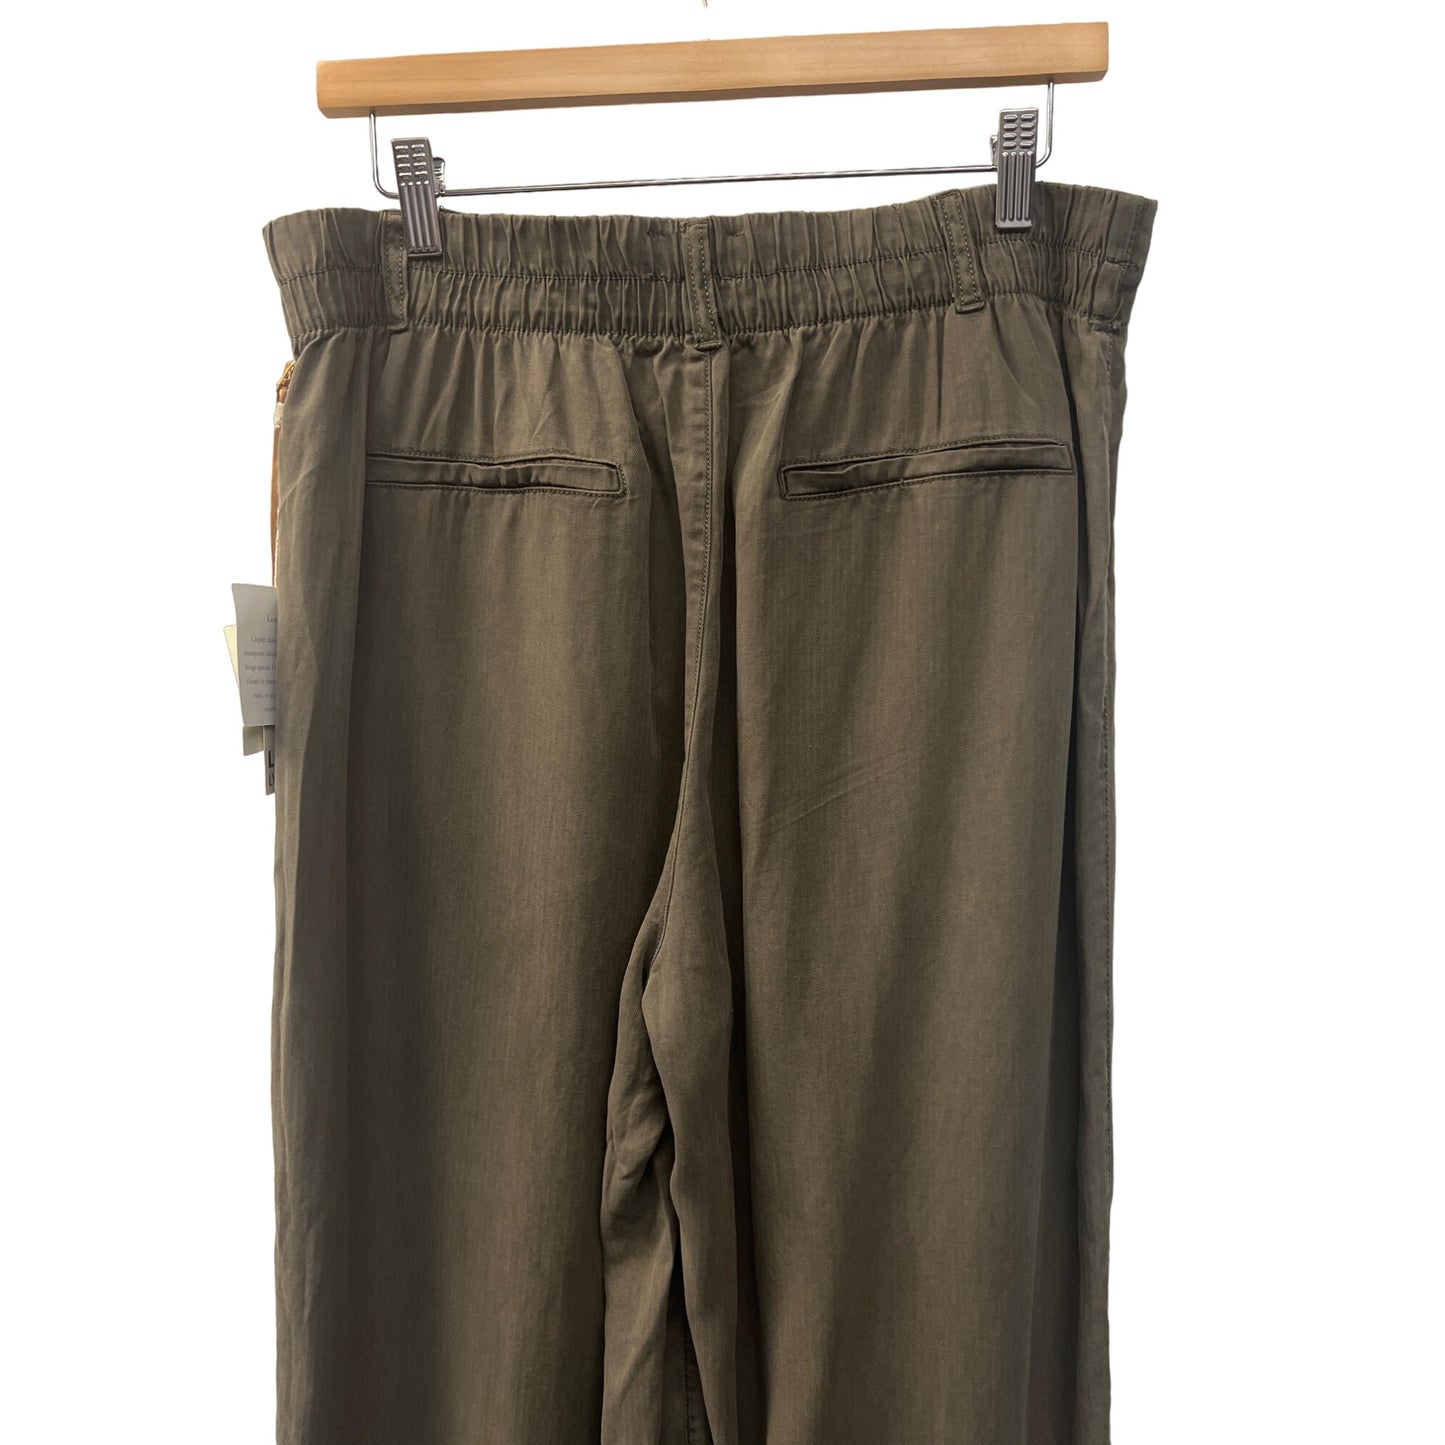 Cynthia Rowley NWT Vintage Look Army Green Lyocell Wide Leg Pants